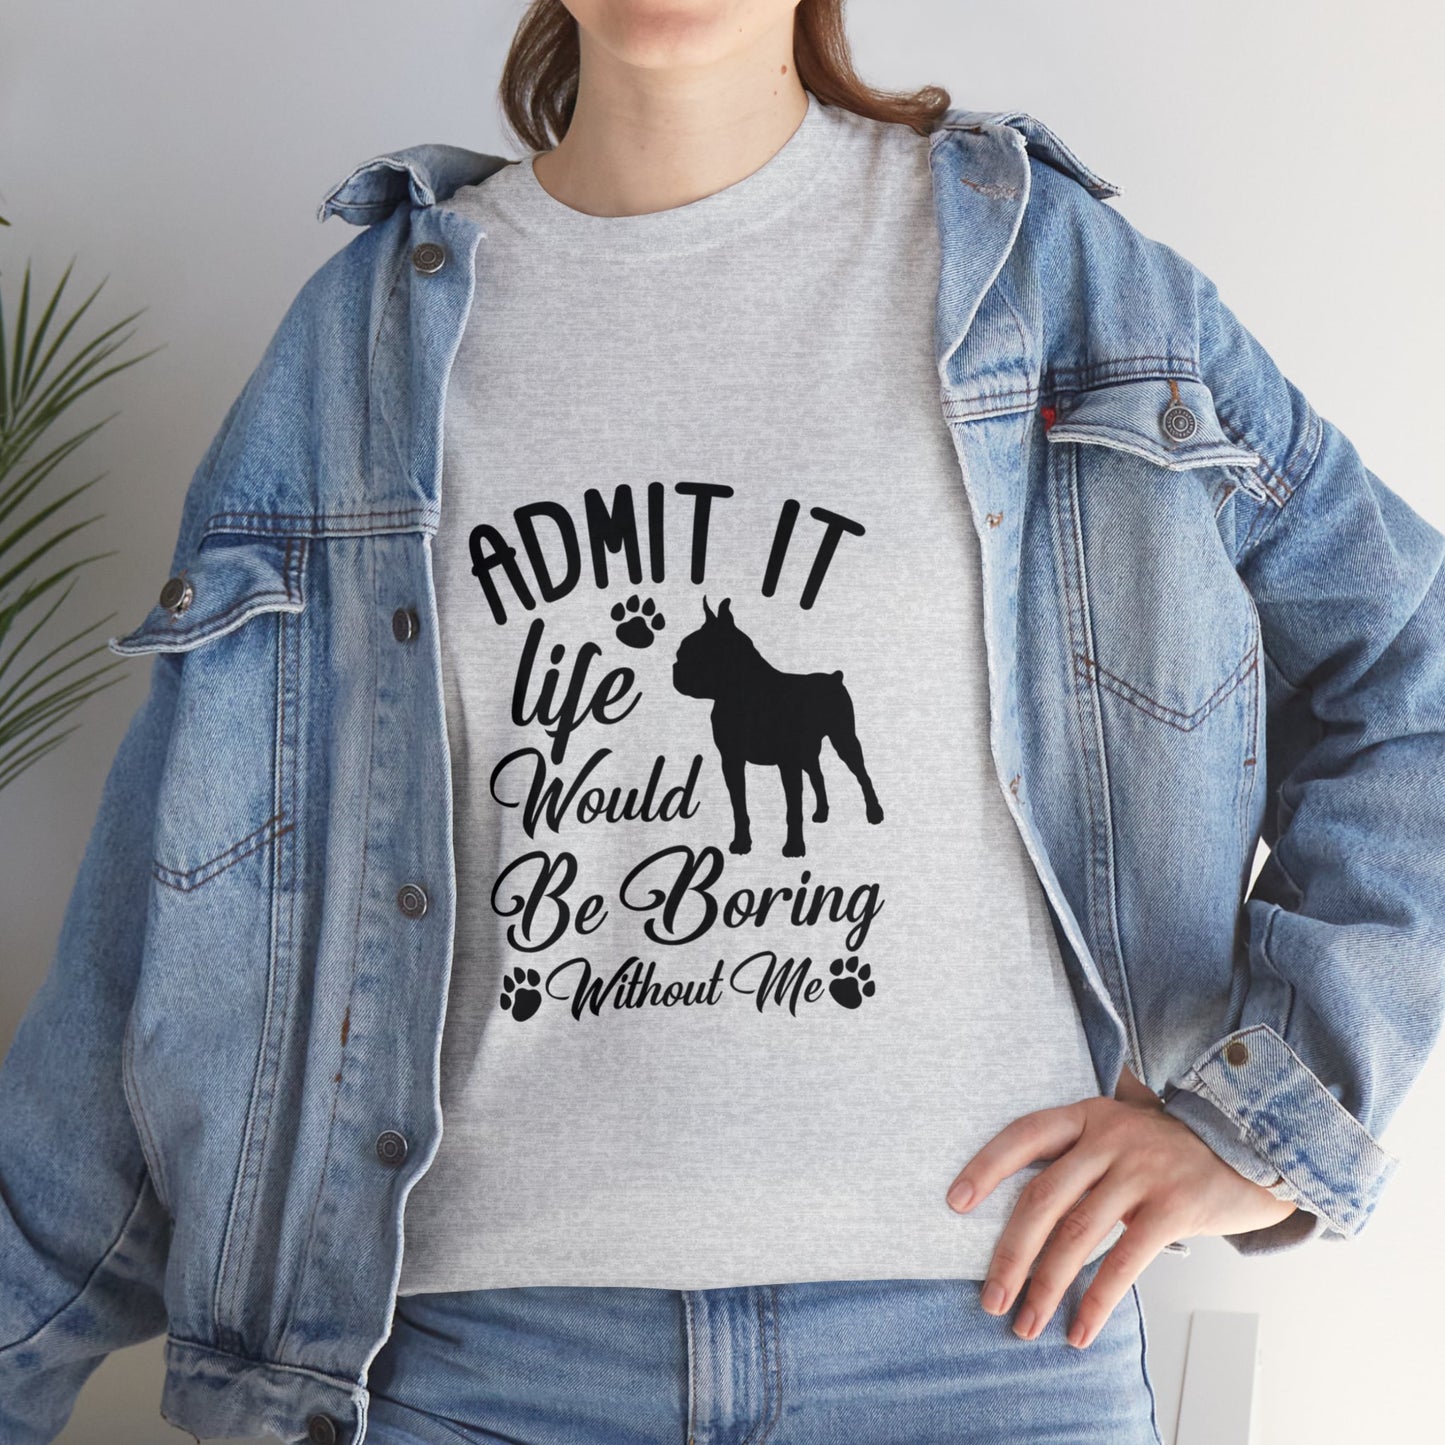 Rex - Unisex Tshirts for Boston Terrier Lovers